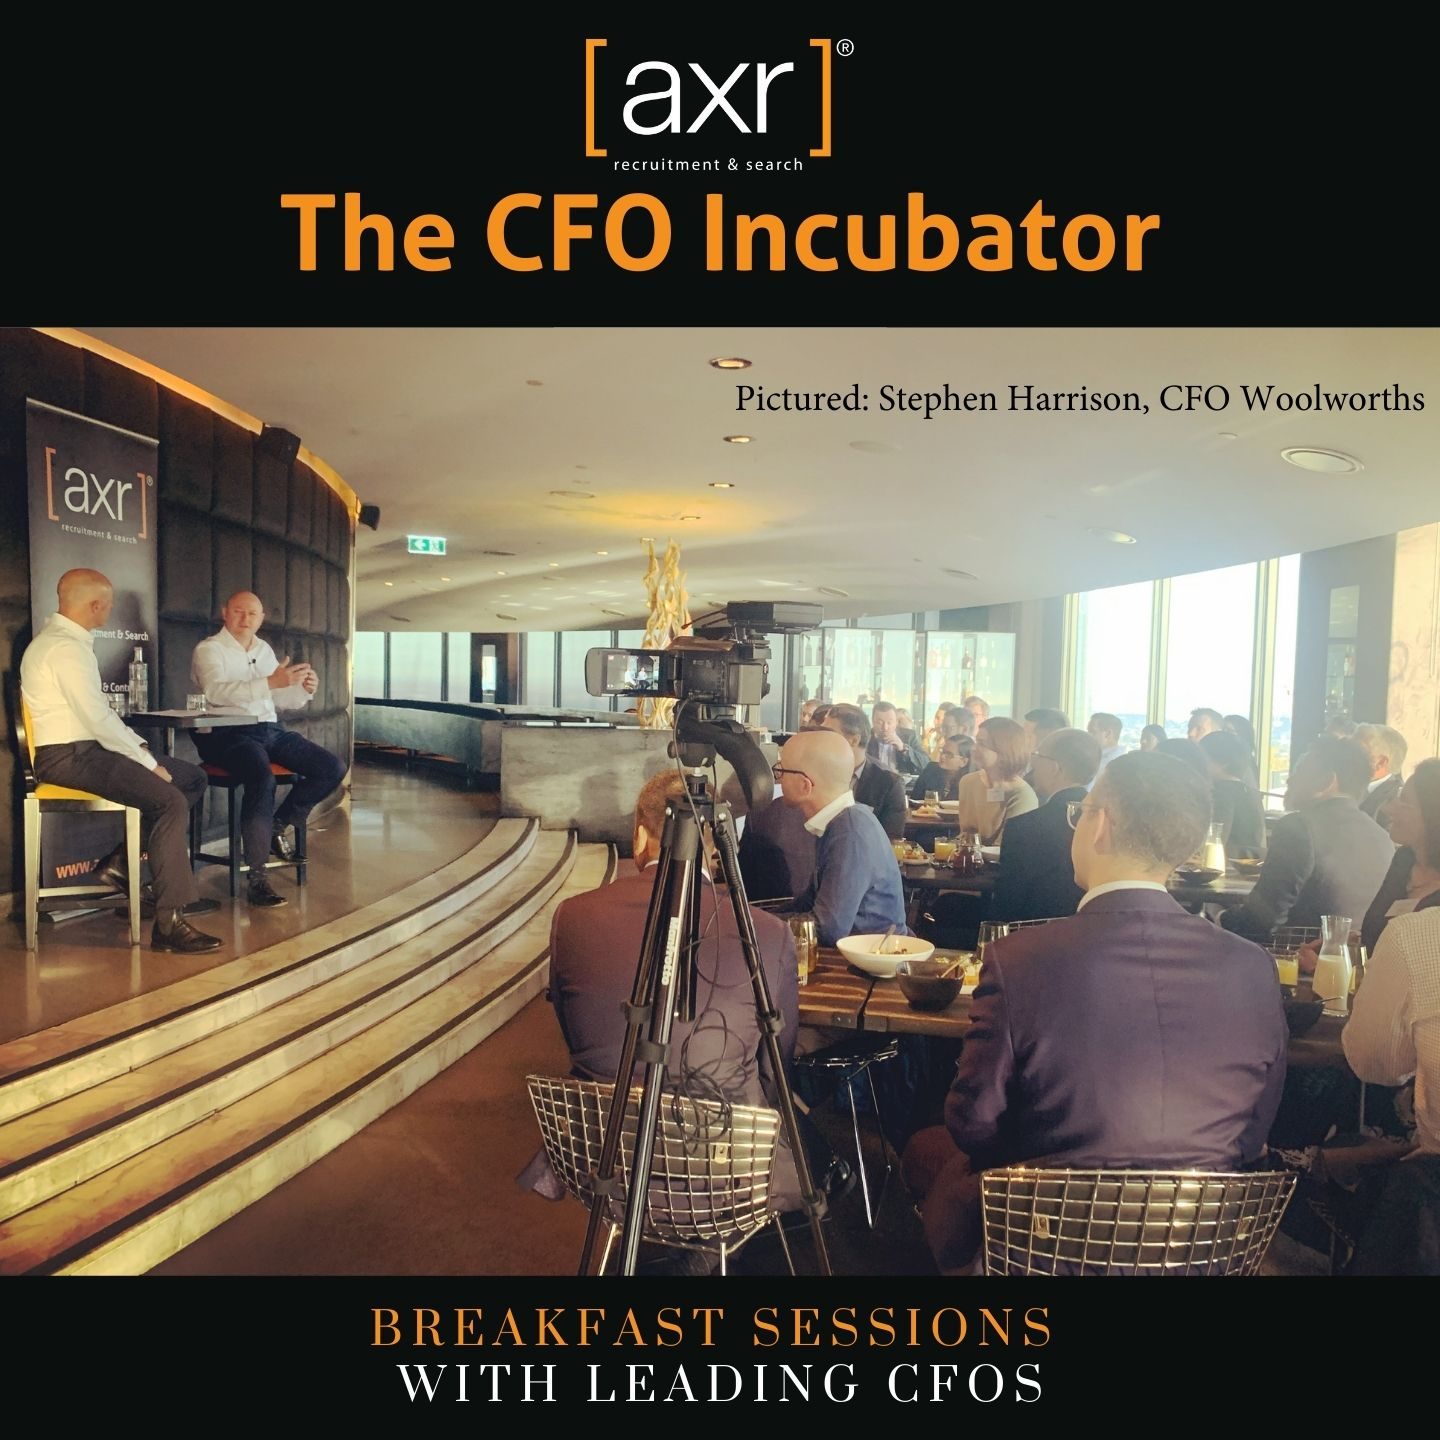 CFO Incubator breakfast session with leading CFOs